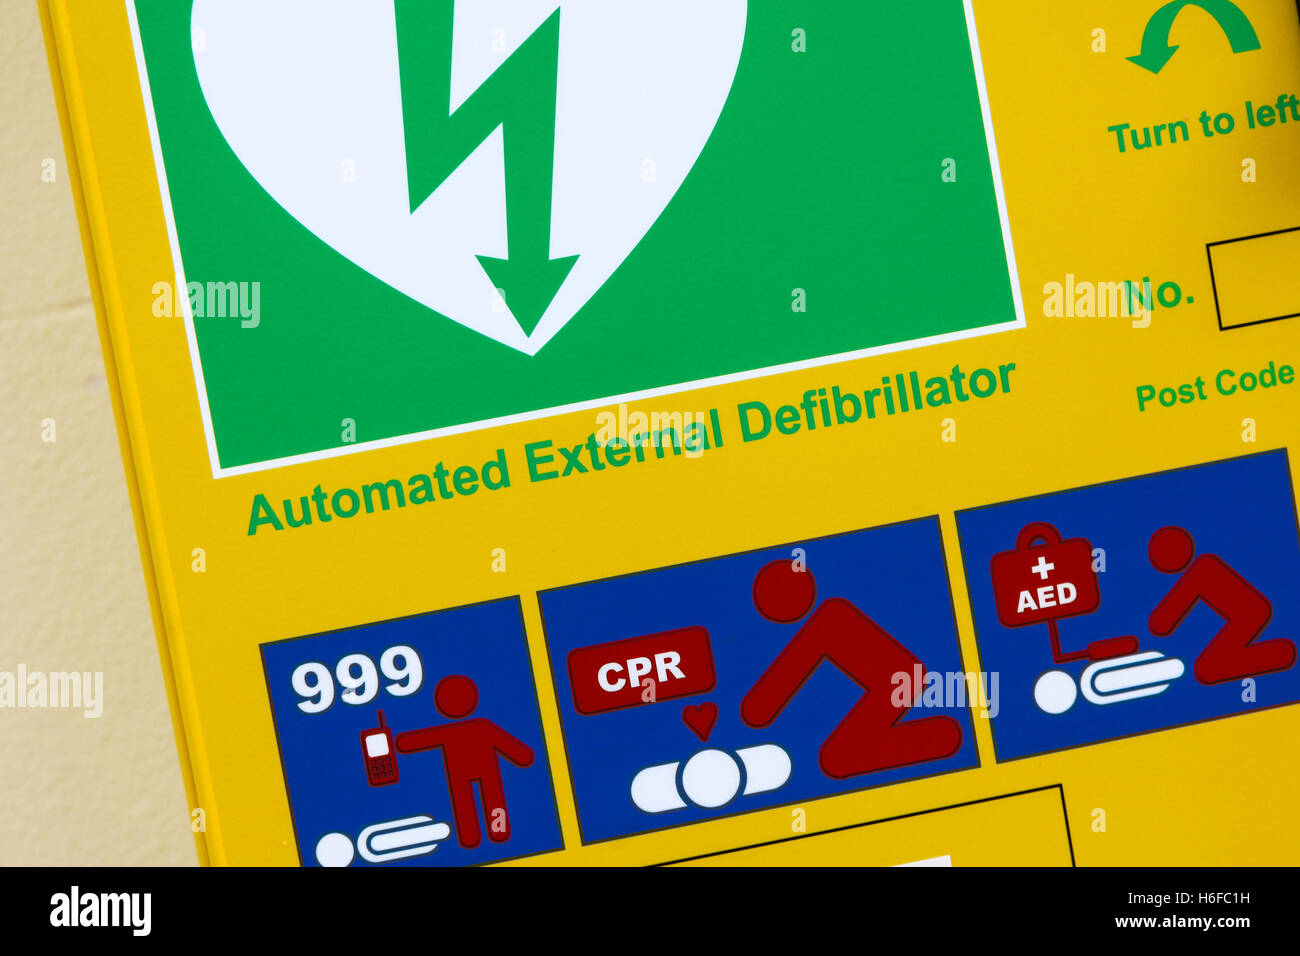 Defibrillator emergency life saving machine in a public place England UK Stock Photo